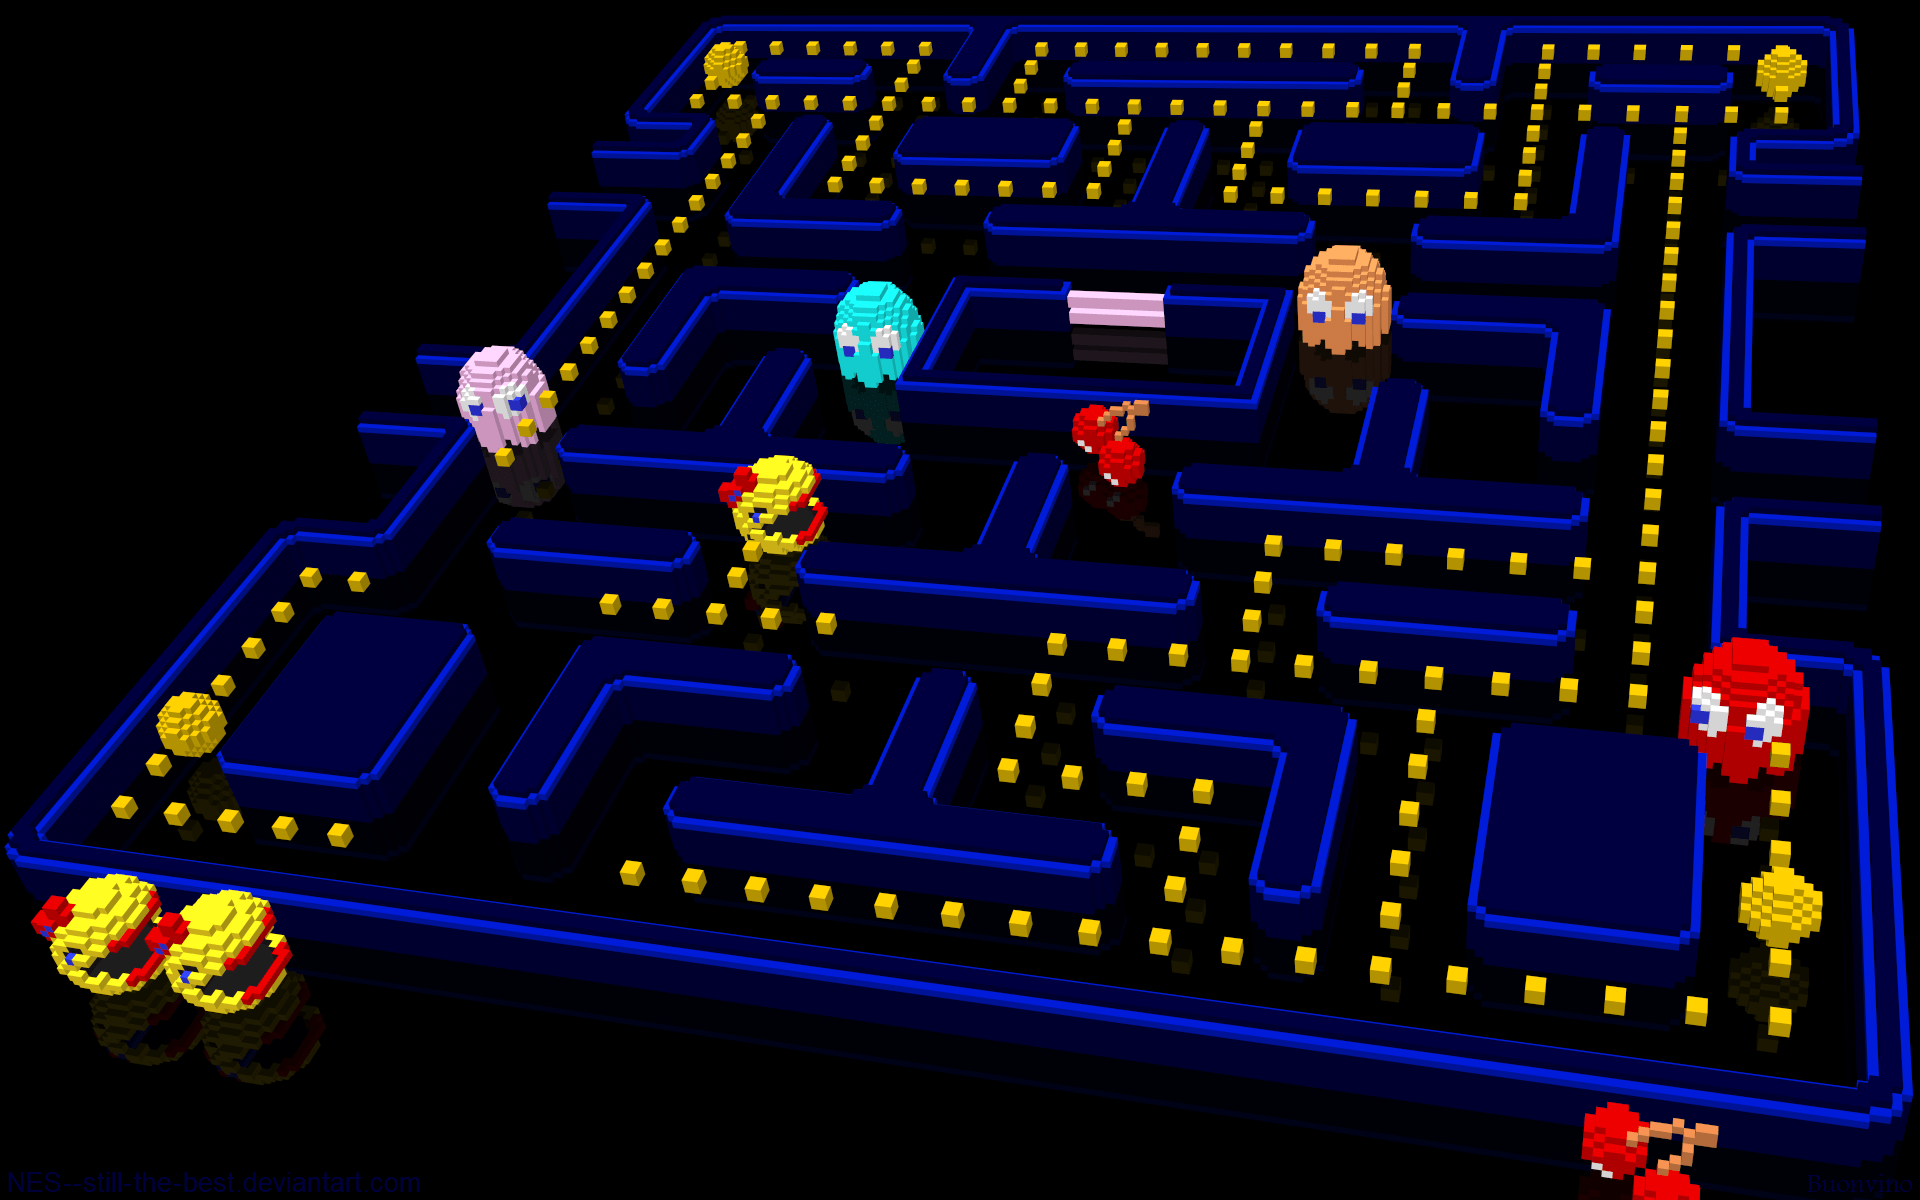 CS 248 Video Game / Pac 2K : Pacman's Revenge